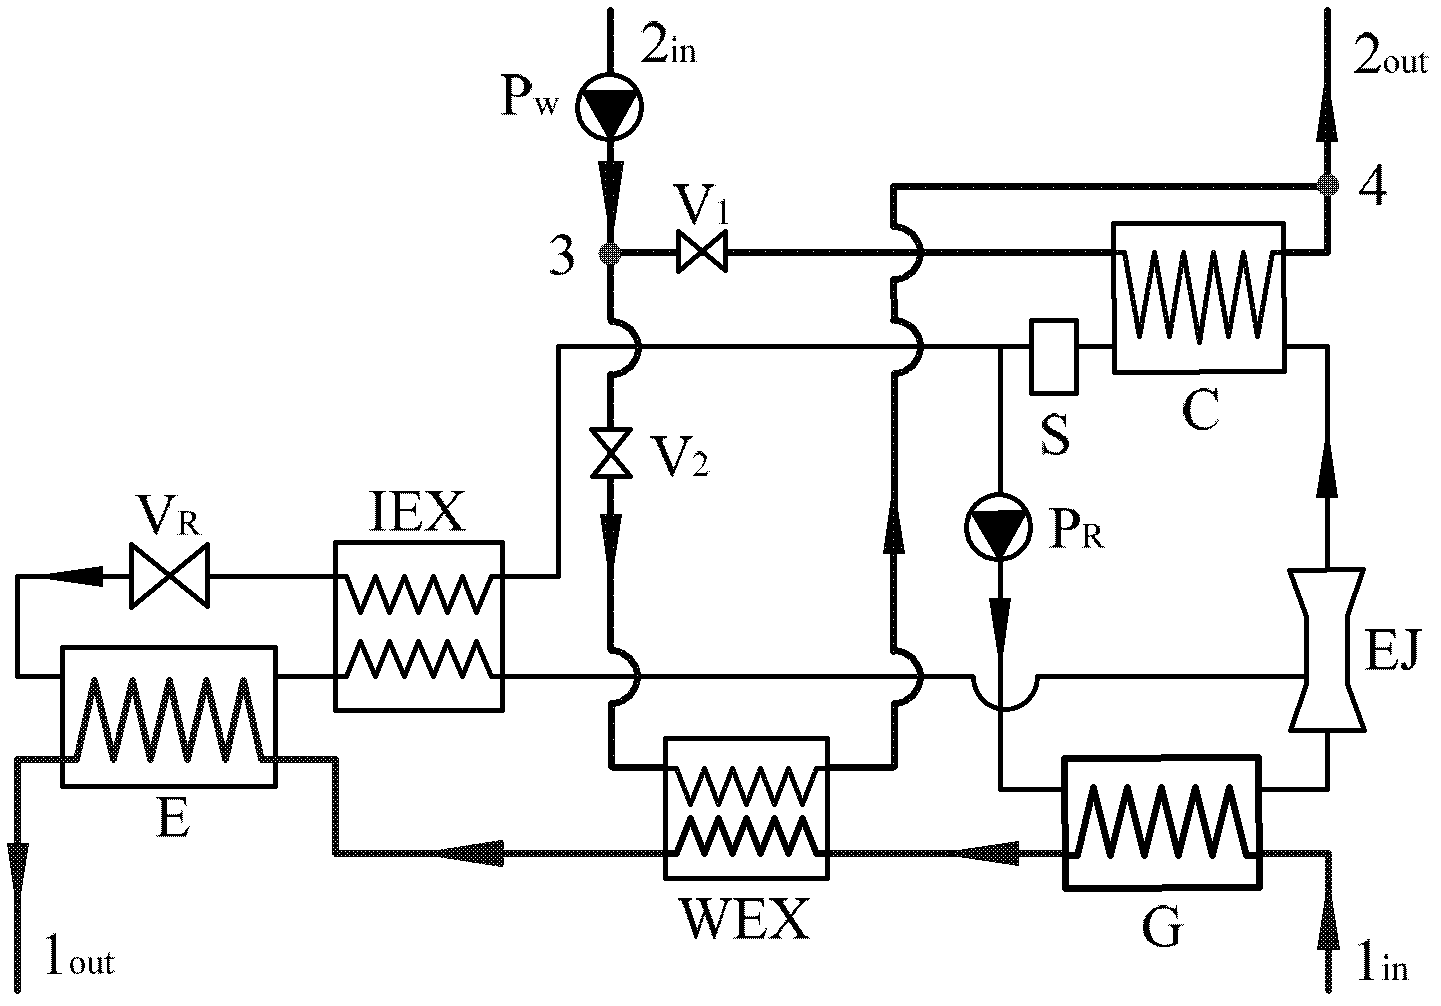 Novel jet-type heat exchanger unit